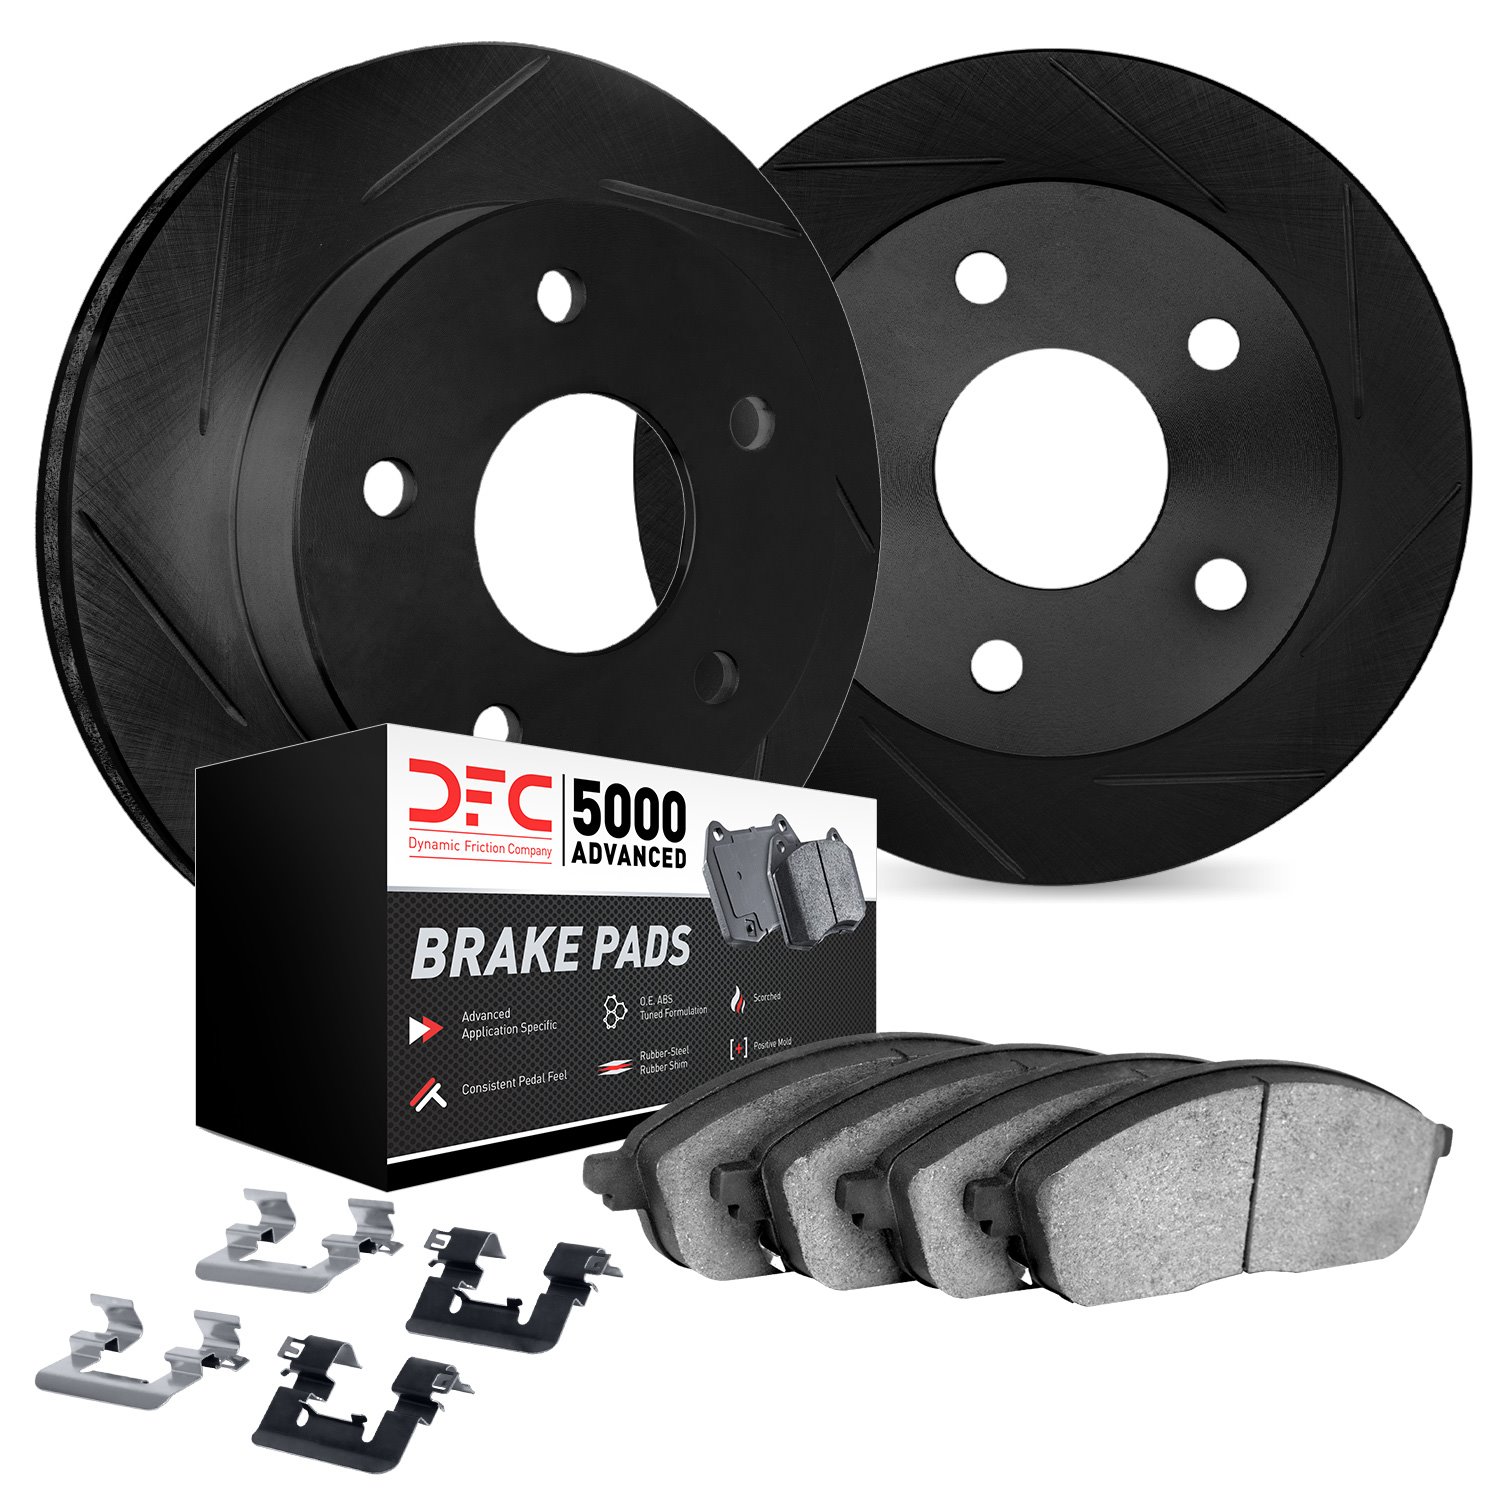 3512-80069 Slotted Brake Rotors w/5000 Advanced Brake Pads Kit & Hardware [Black], 2007-2012 Ford/Lincoln/Mercury/Mazda, Positio